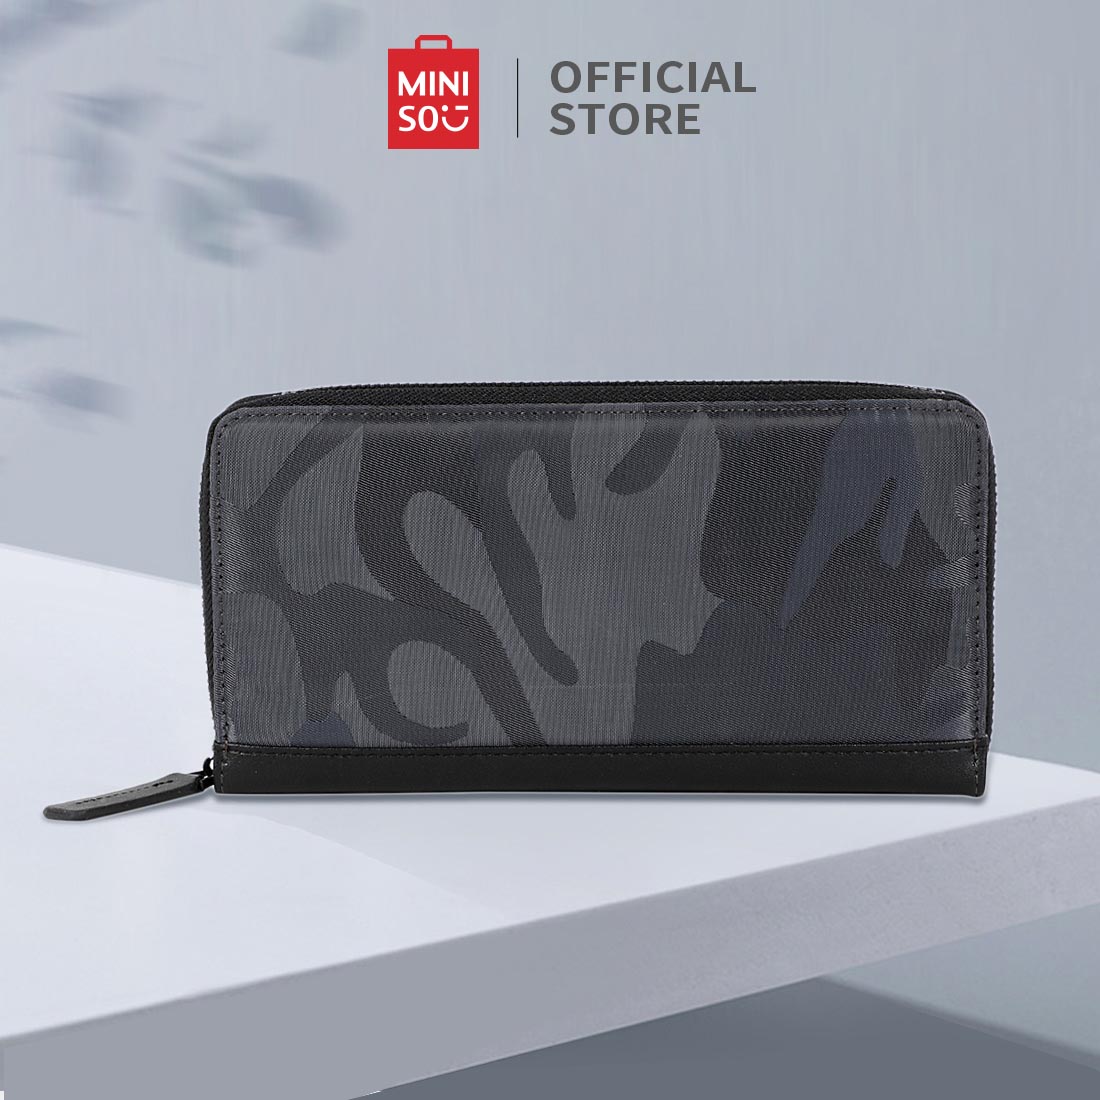 MINISO Wallet Long Zipper Wallet for Women Camouflage Print, Grey